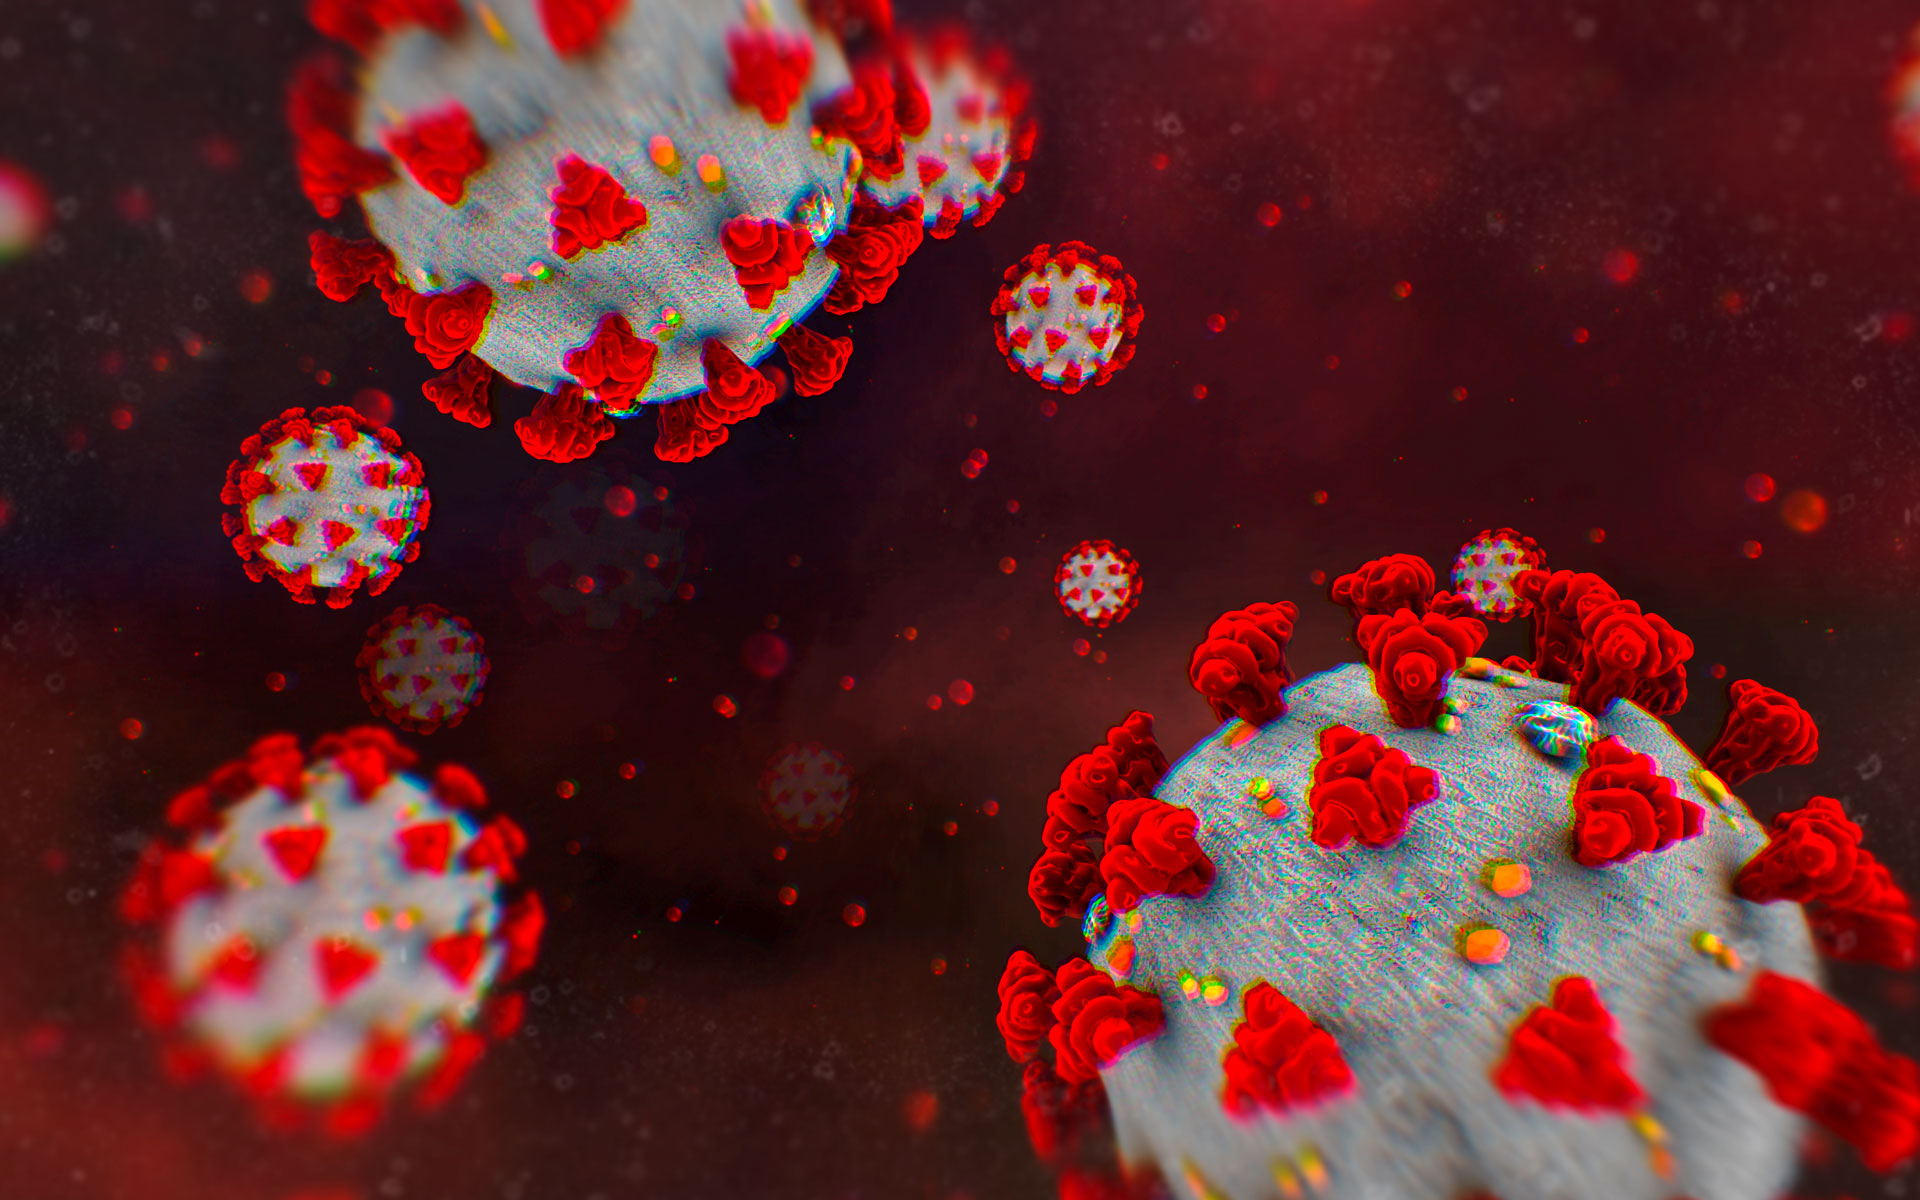 Bild von dem Corona Virus